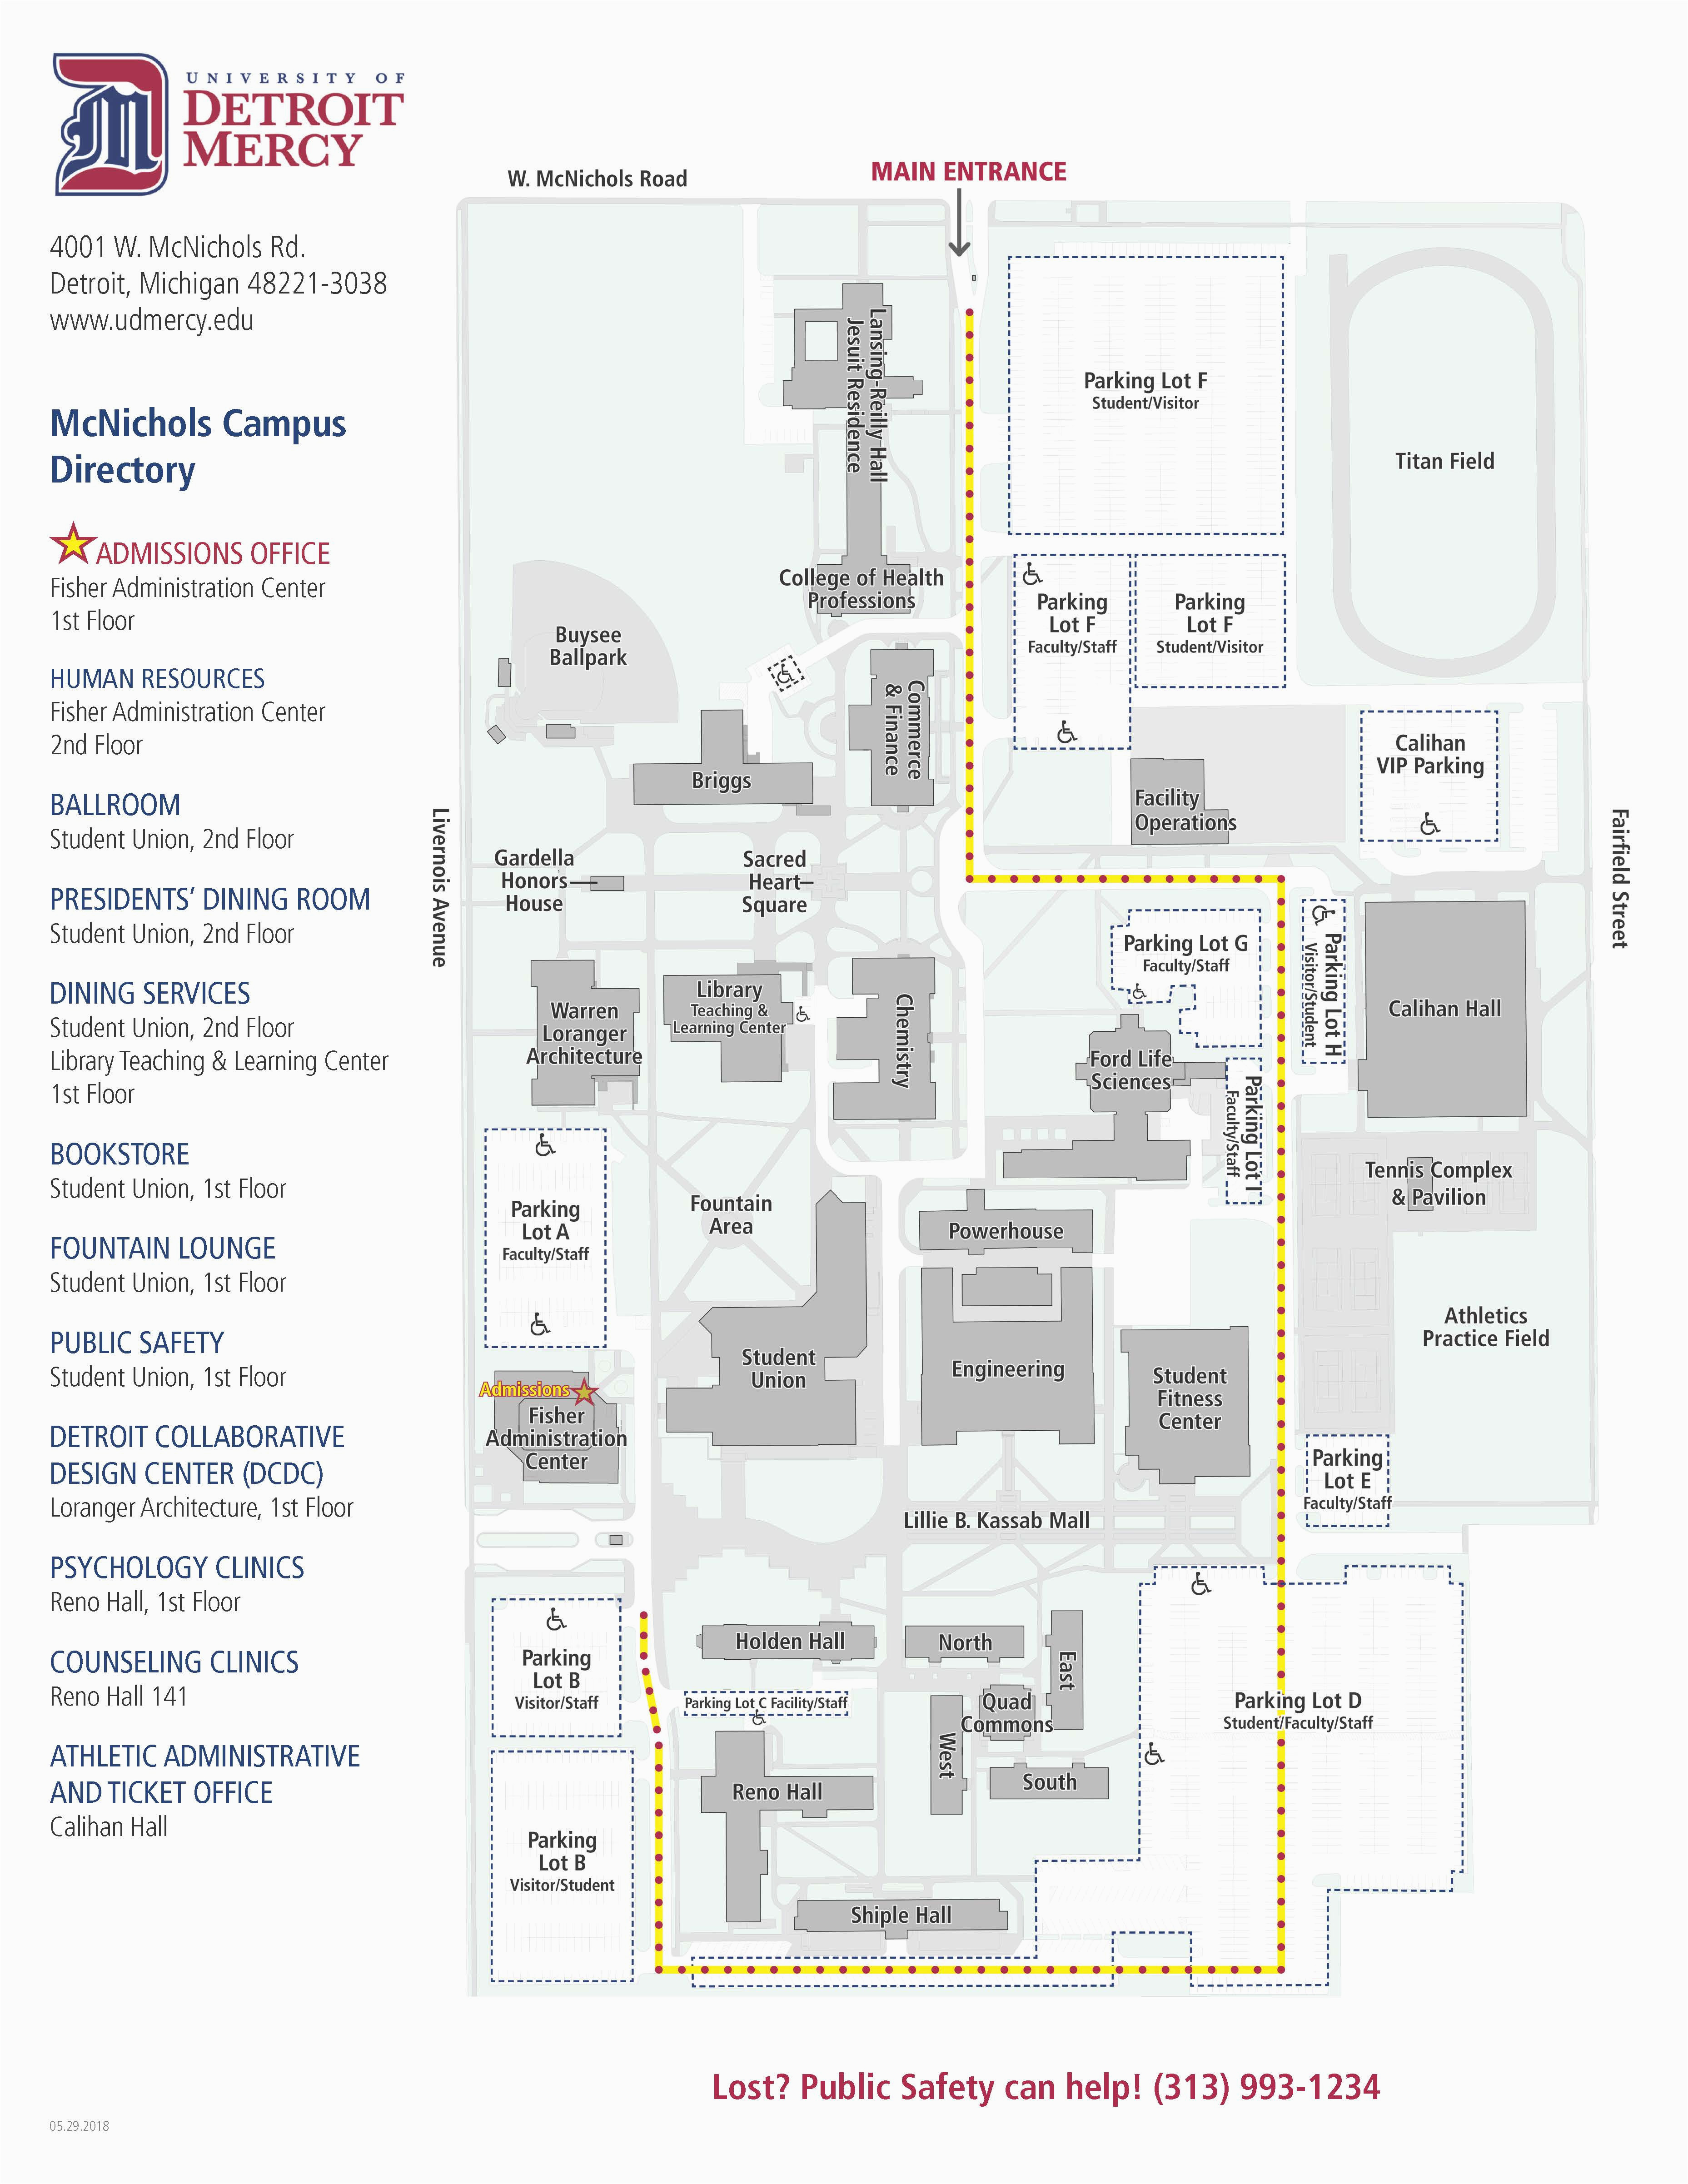 Western Michigan Campus Map Campus Locations University Of Detroit Mercy